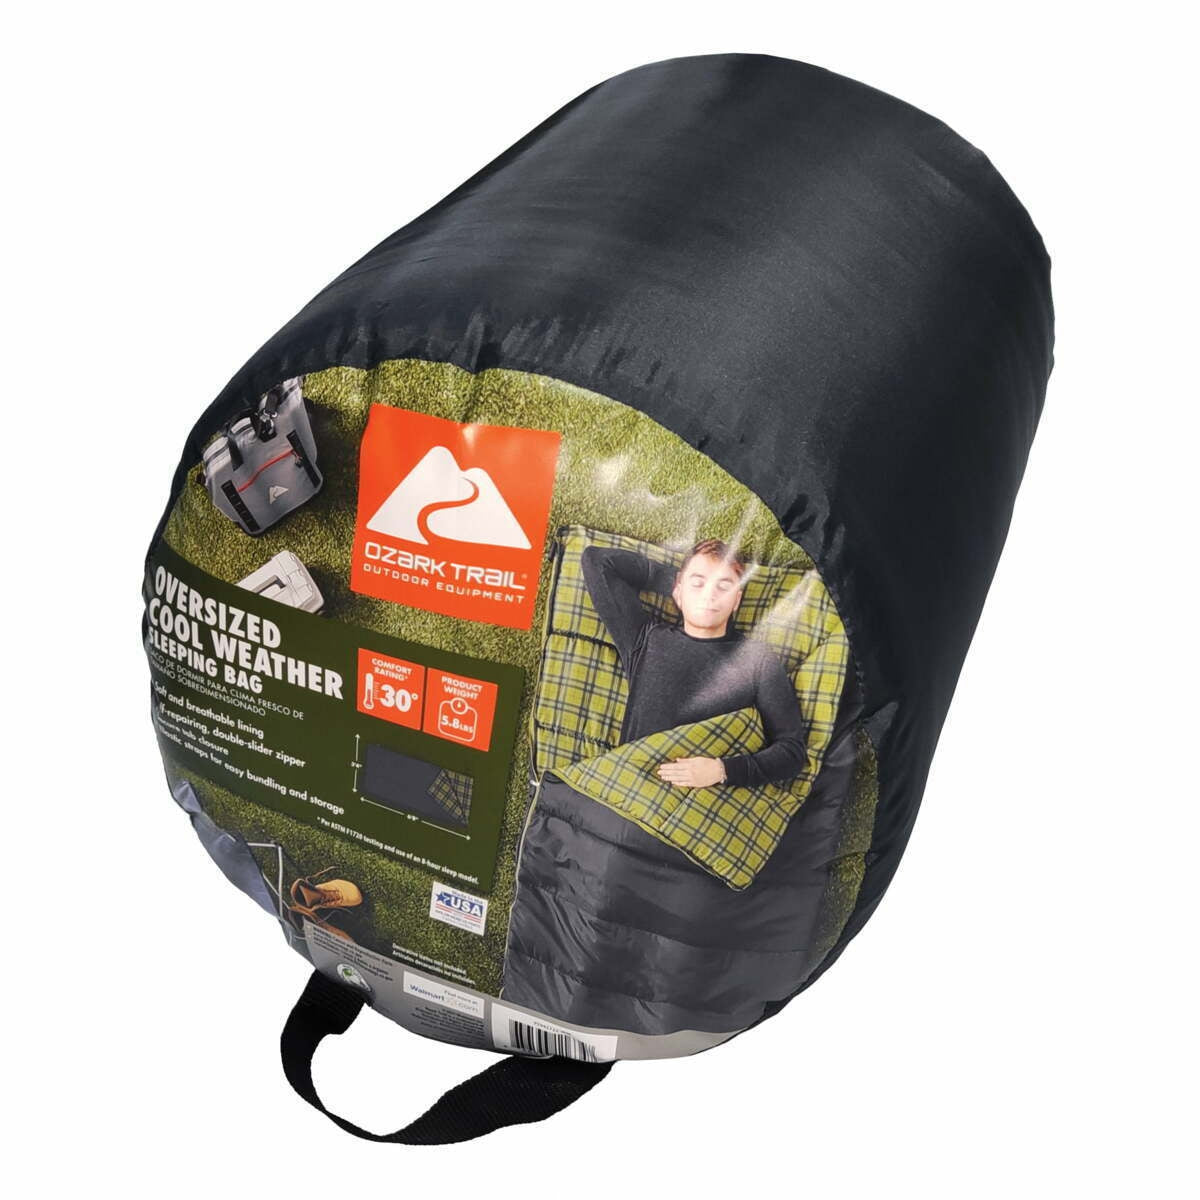 Ozark Trail Oversized 30-Degree Cool Weather Sleeping Bag, Gray, 40x8